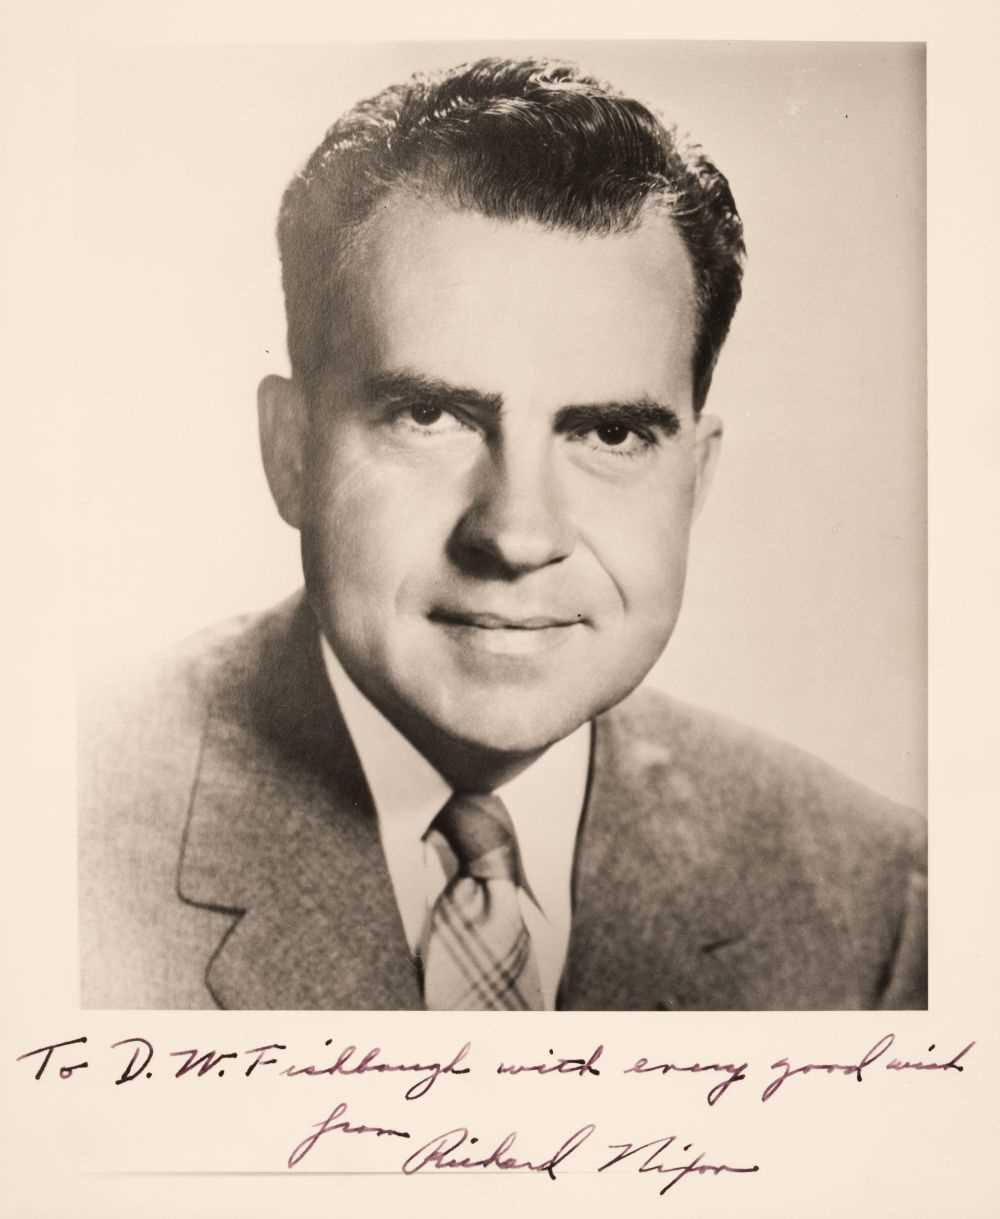 Lot 267 - Nixon (Richard Milhous, 1913-1994). Photograph Signed, 'Richard Nixon', c. 1950